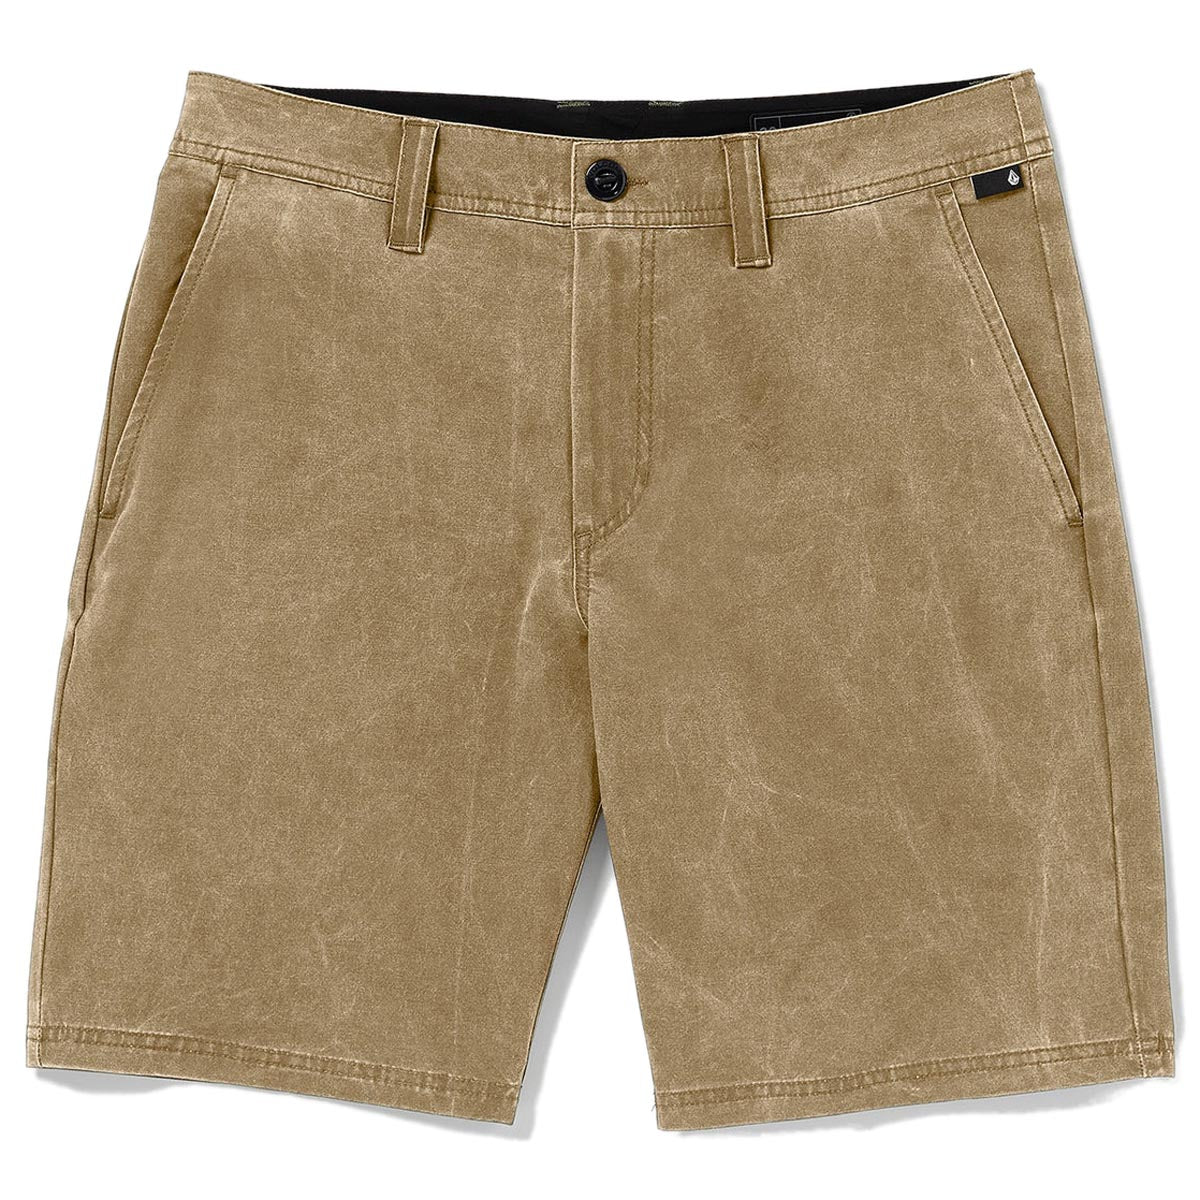 Volcom Stone Faded Hybrid 19 Shorts - Dark Khaki image 1